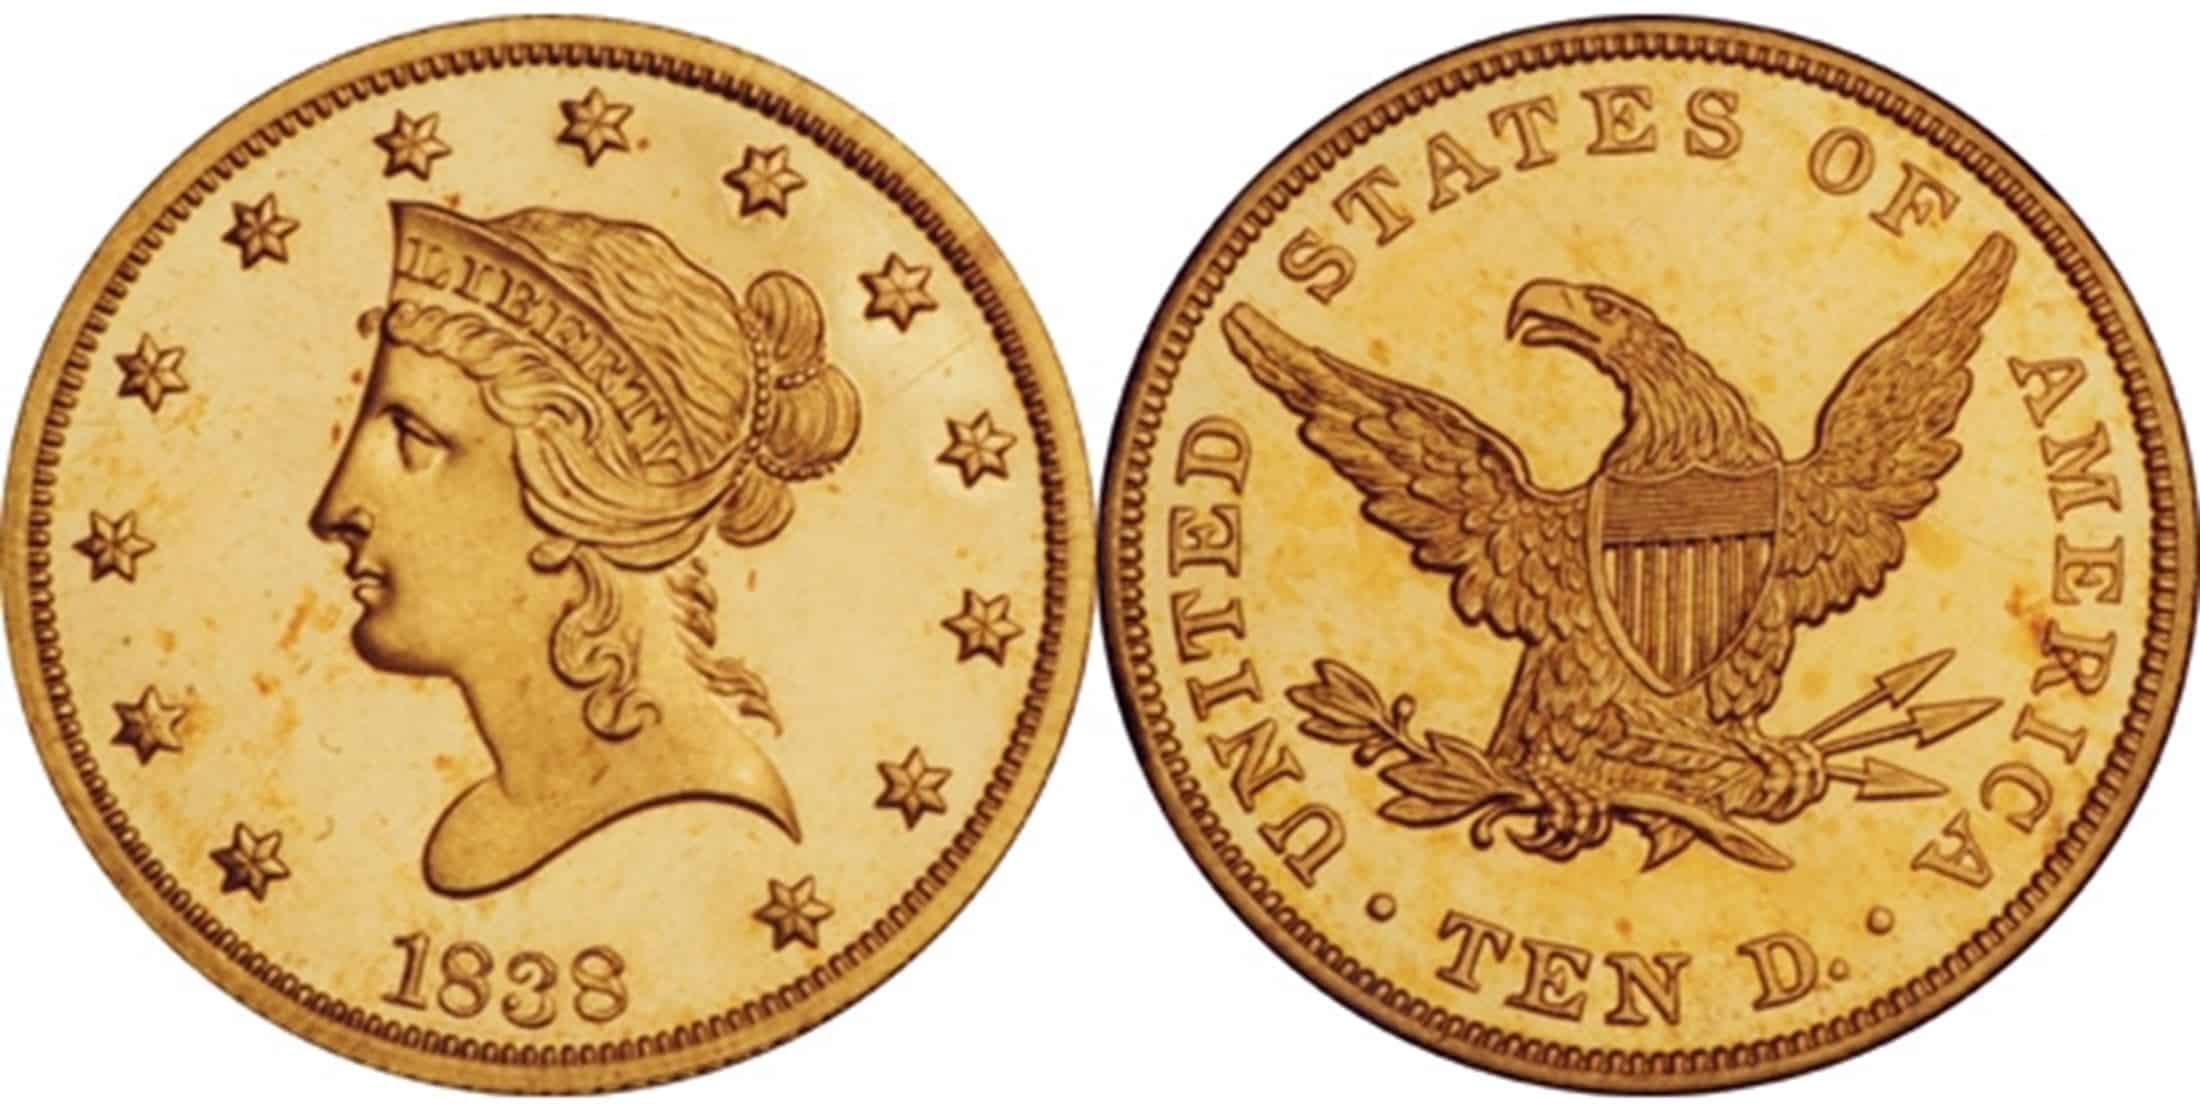 $10 Coronet gold eagle proofs